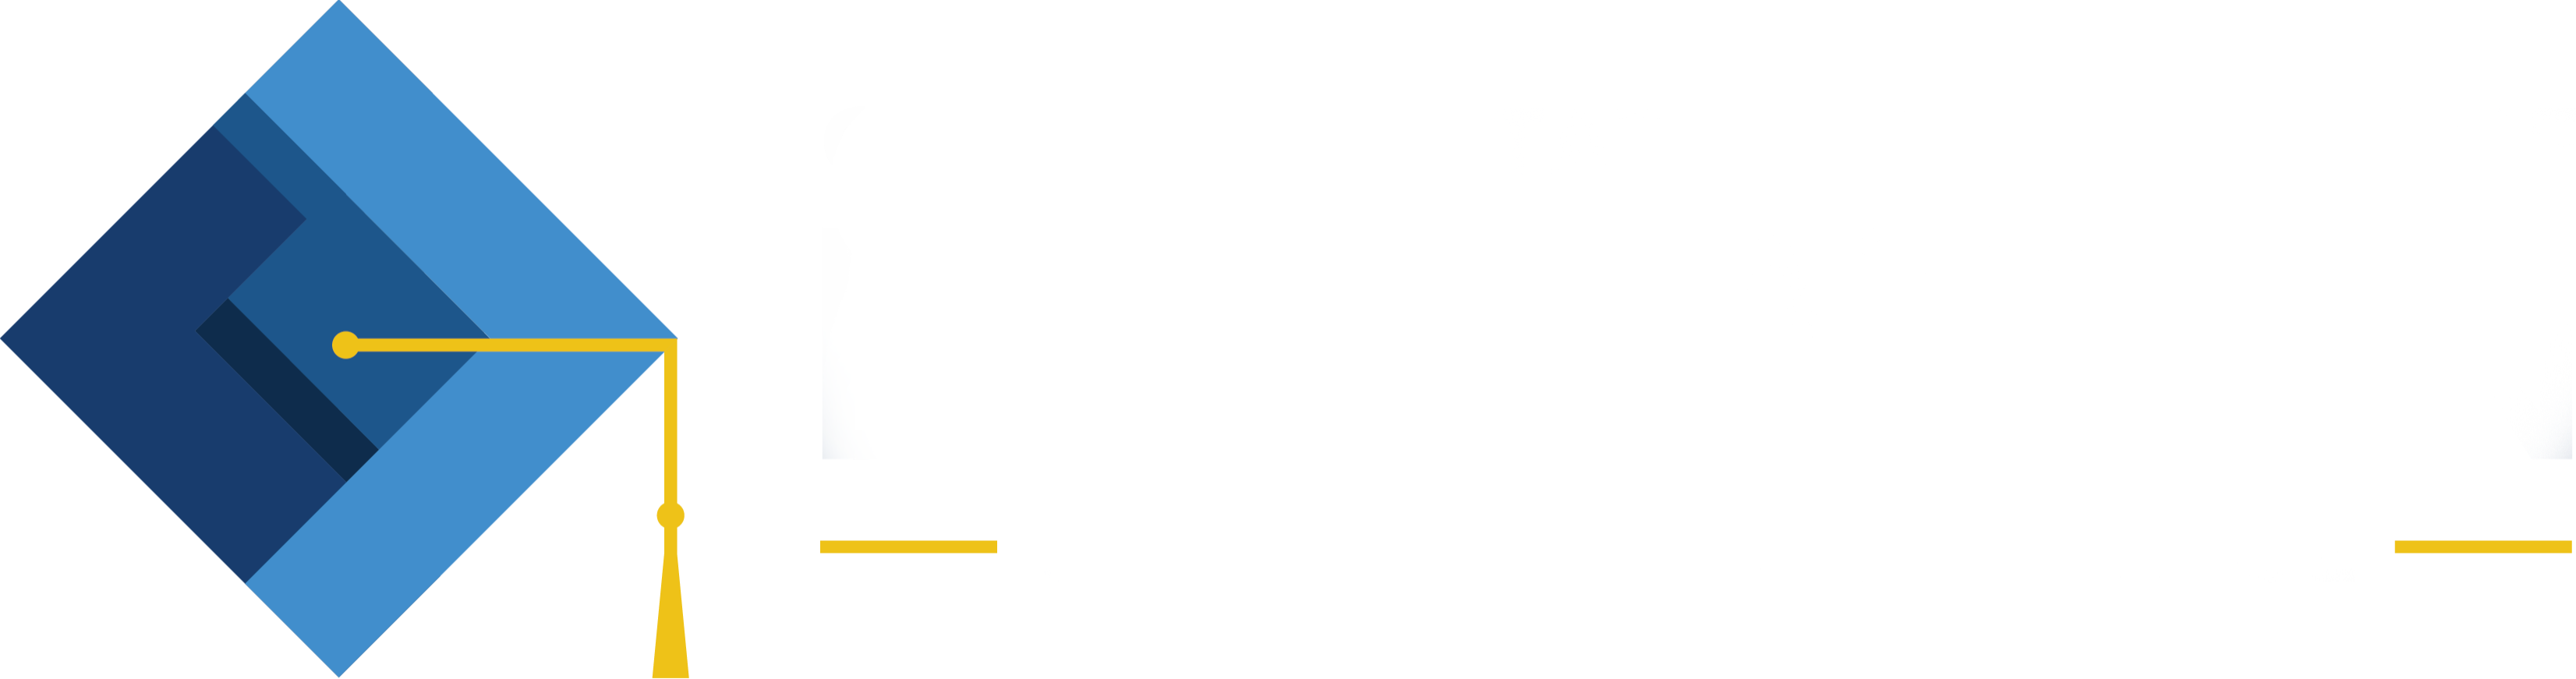 oklahoma department of education logo